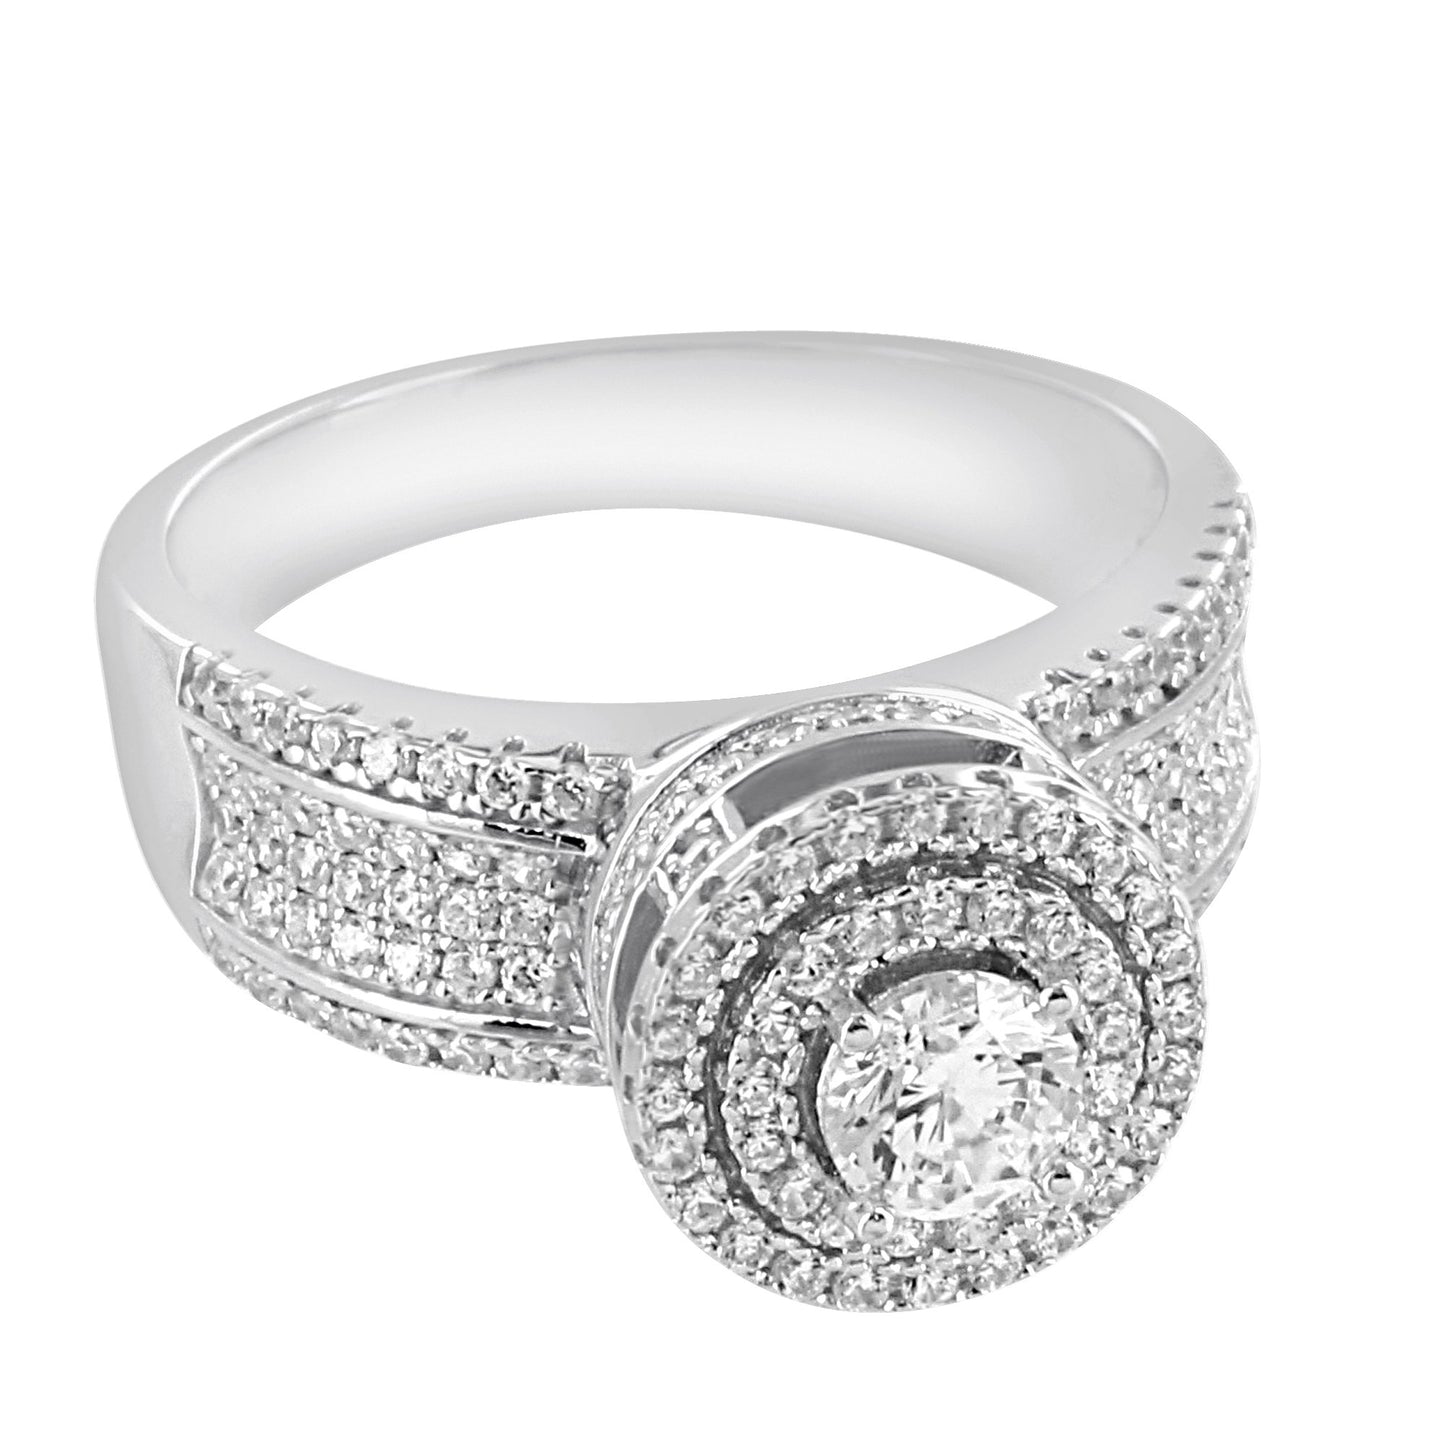 Solitaire Prong Designer Bling Custom Sterling Silver Engagement Ring